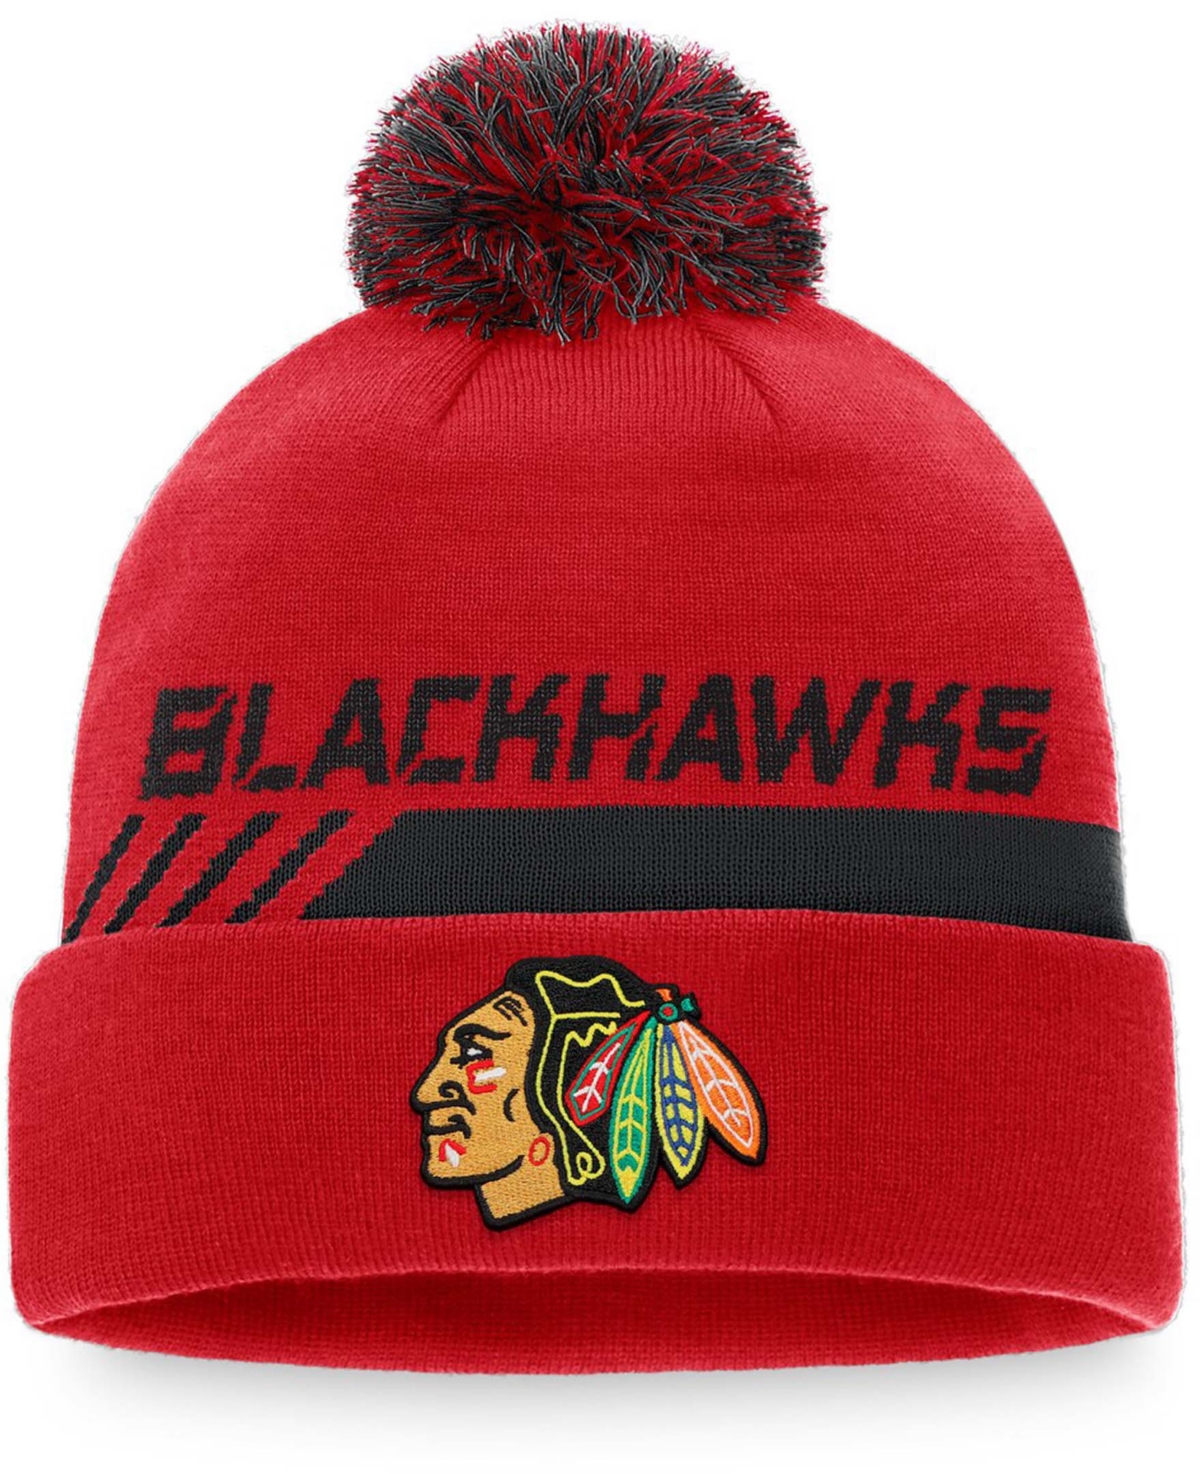 Shop Lids Men's Fanatics Branded Red/black Chicago Blackhawks Authentic Pro Team Locker Room Cuffed Knit Hat W